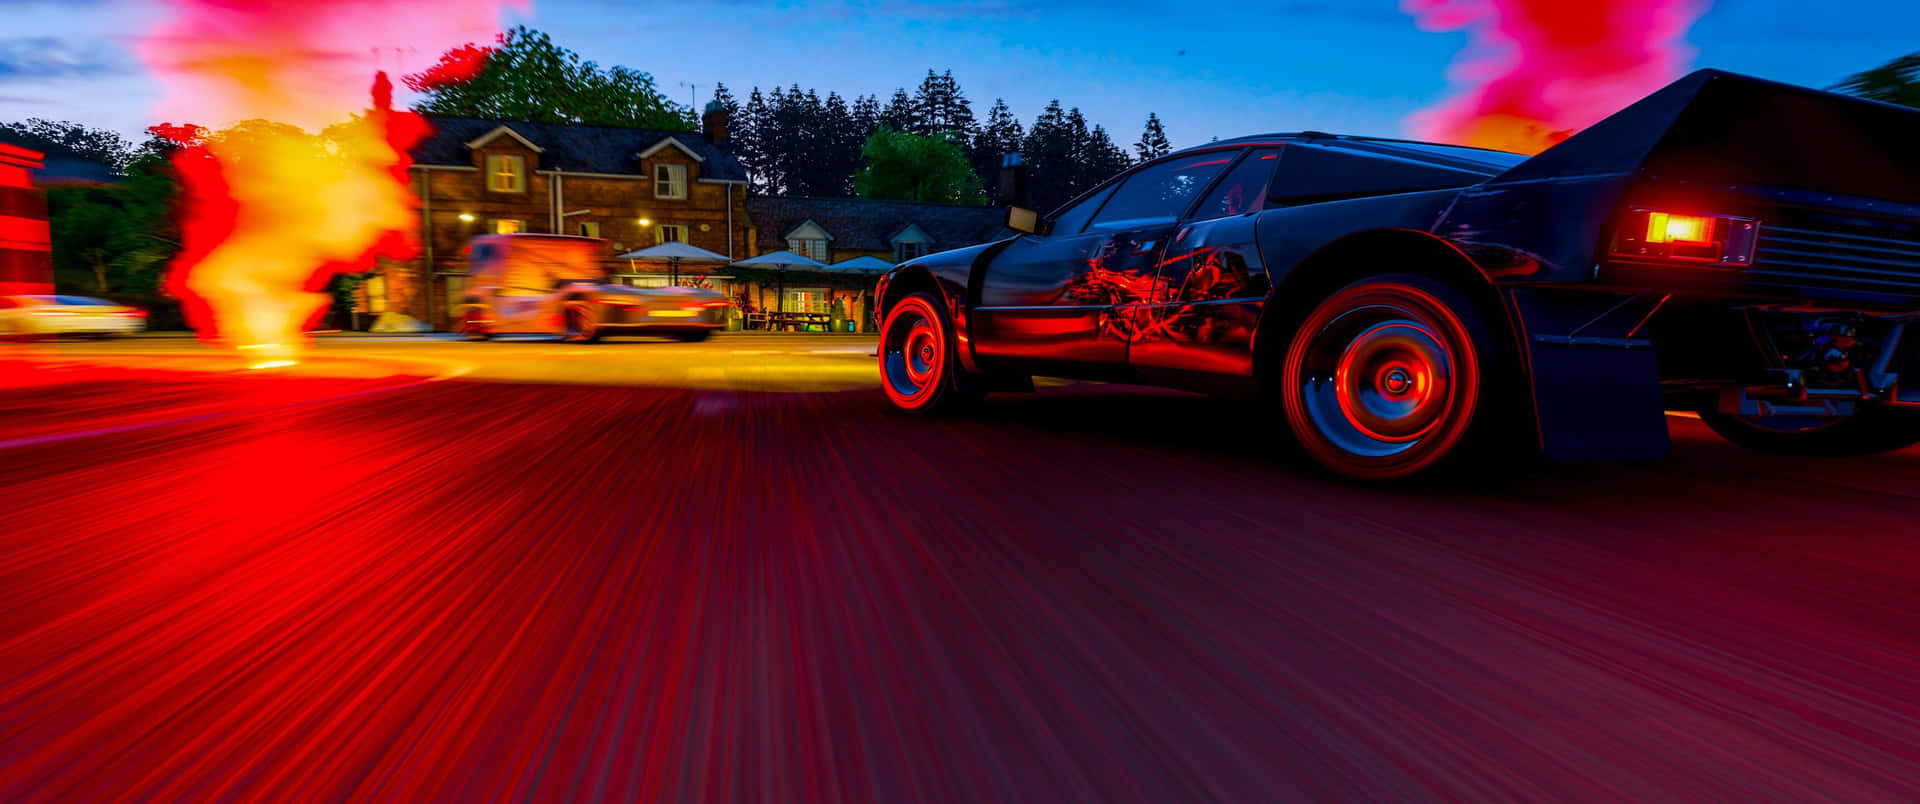 3440x1440p Race By Red Smoke Forza Horizon 4 Background